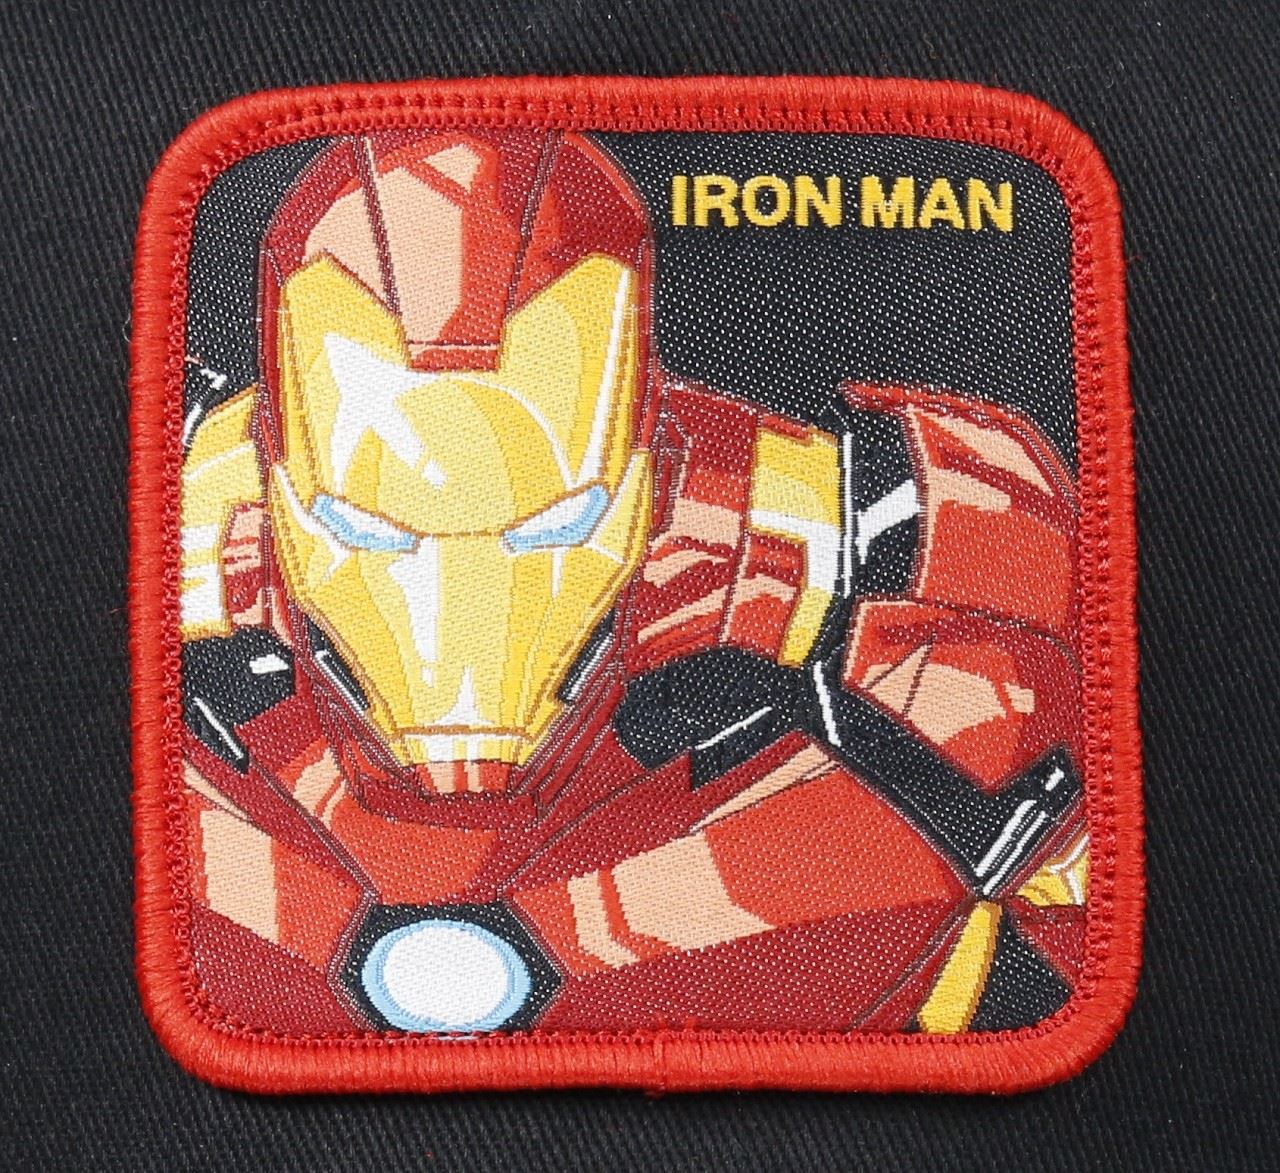 Iron Man Trucker Cap Capslab